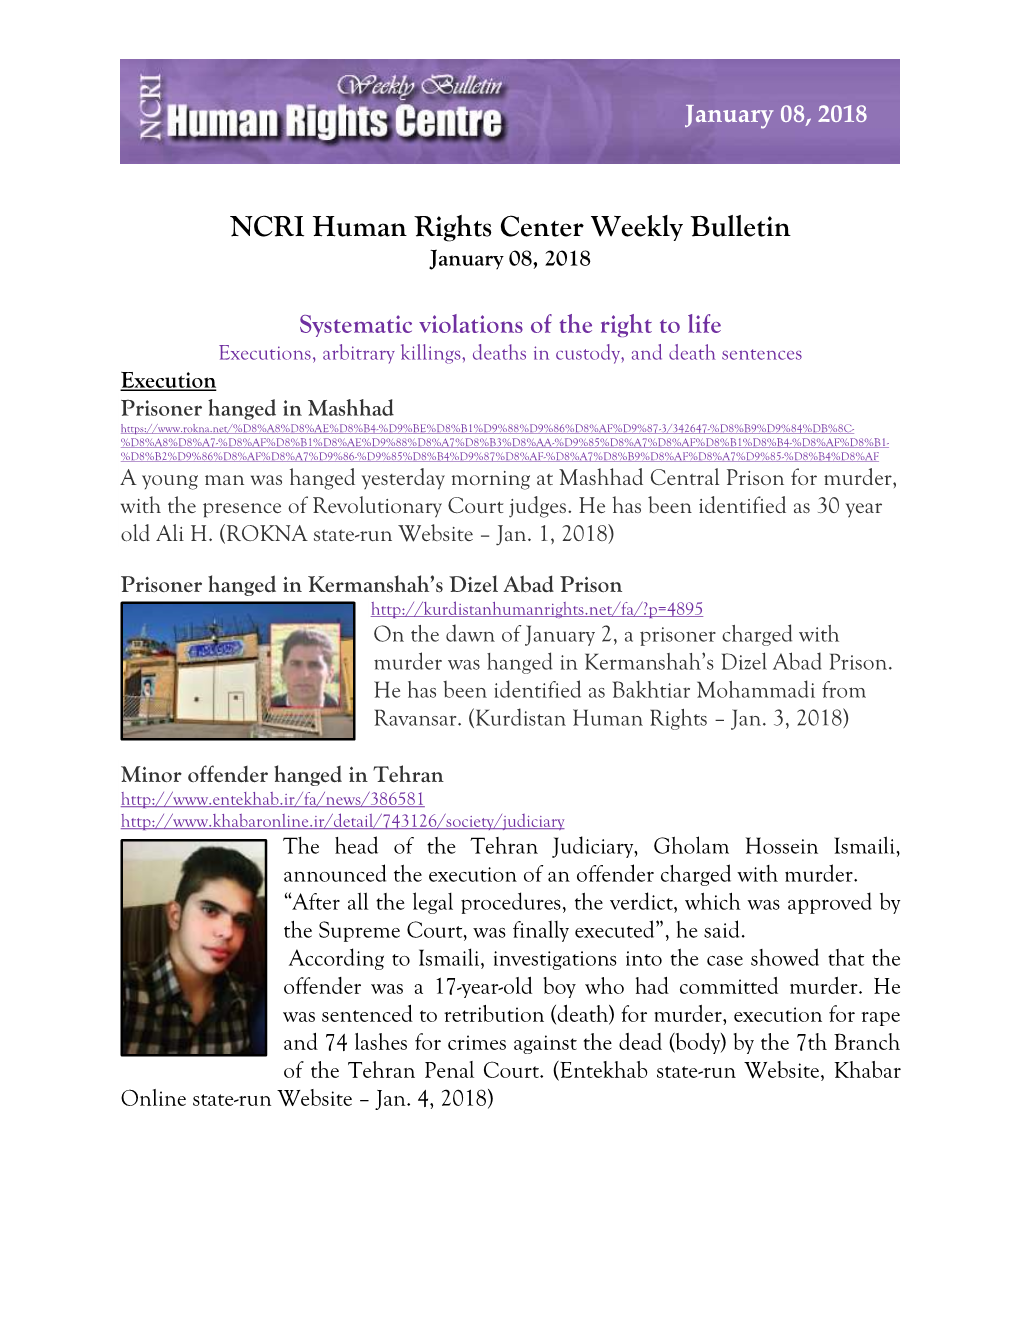 NCRI Human Rights Center Weekly Bulletin January 08, 2018